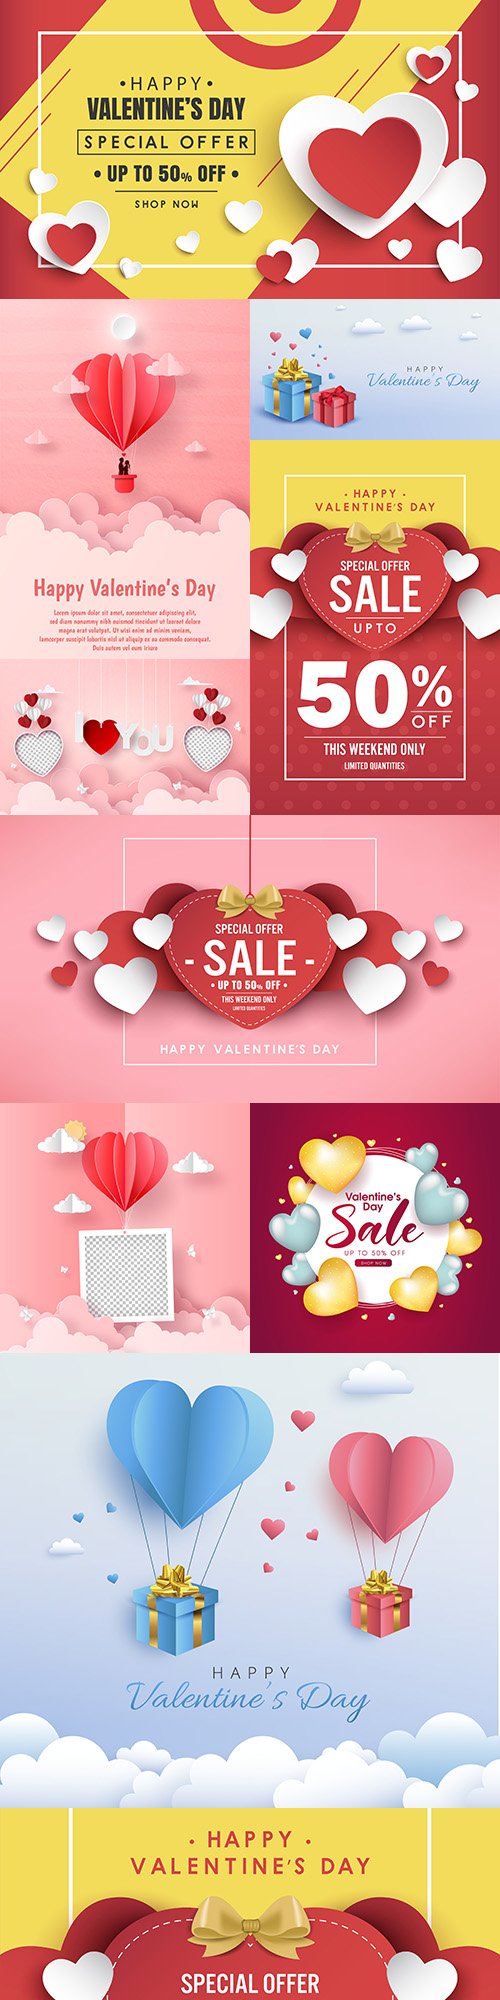 Happy Valentine's Day romantic decorative illustrations 36